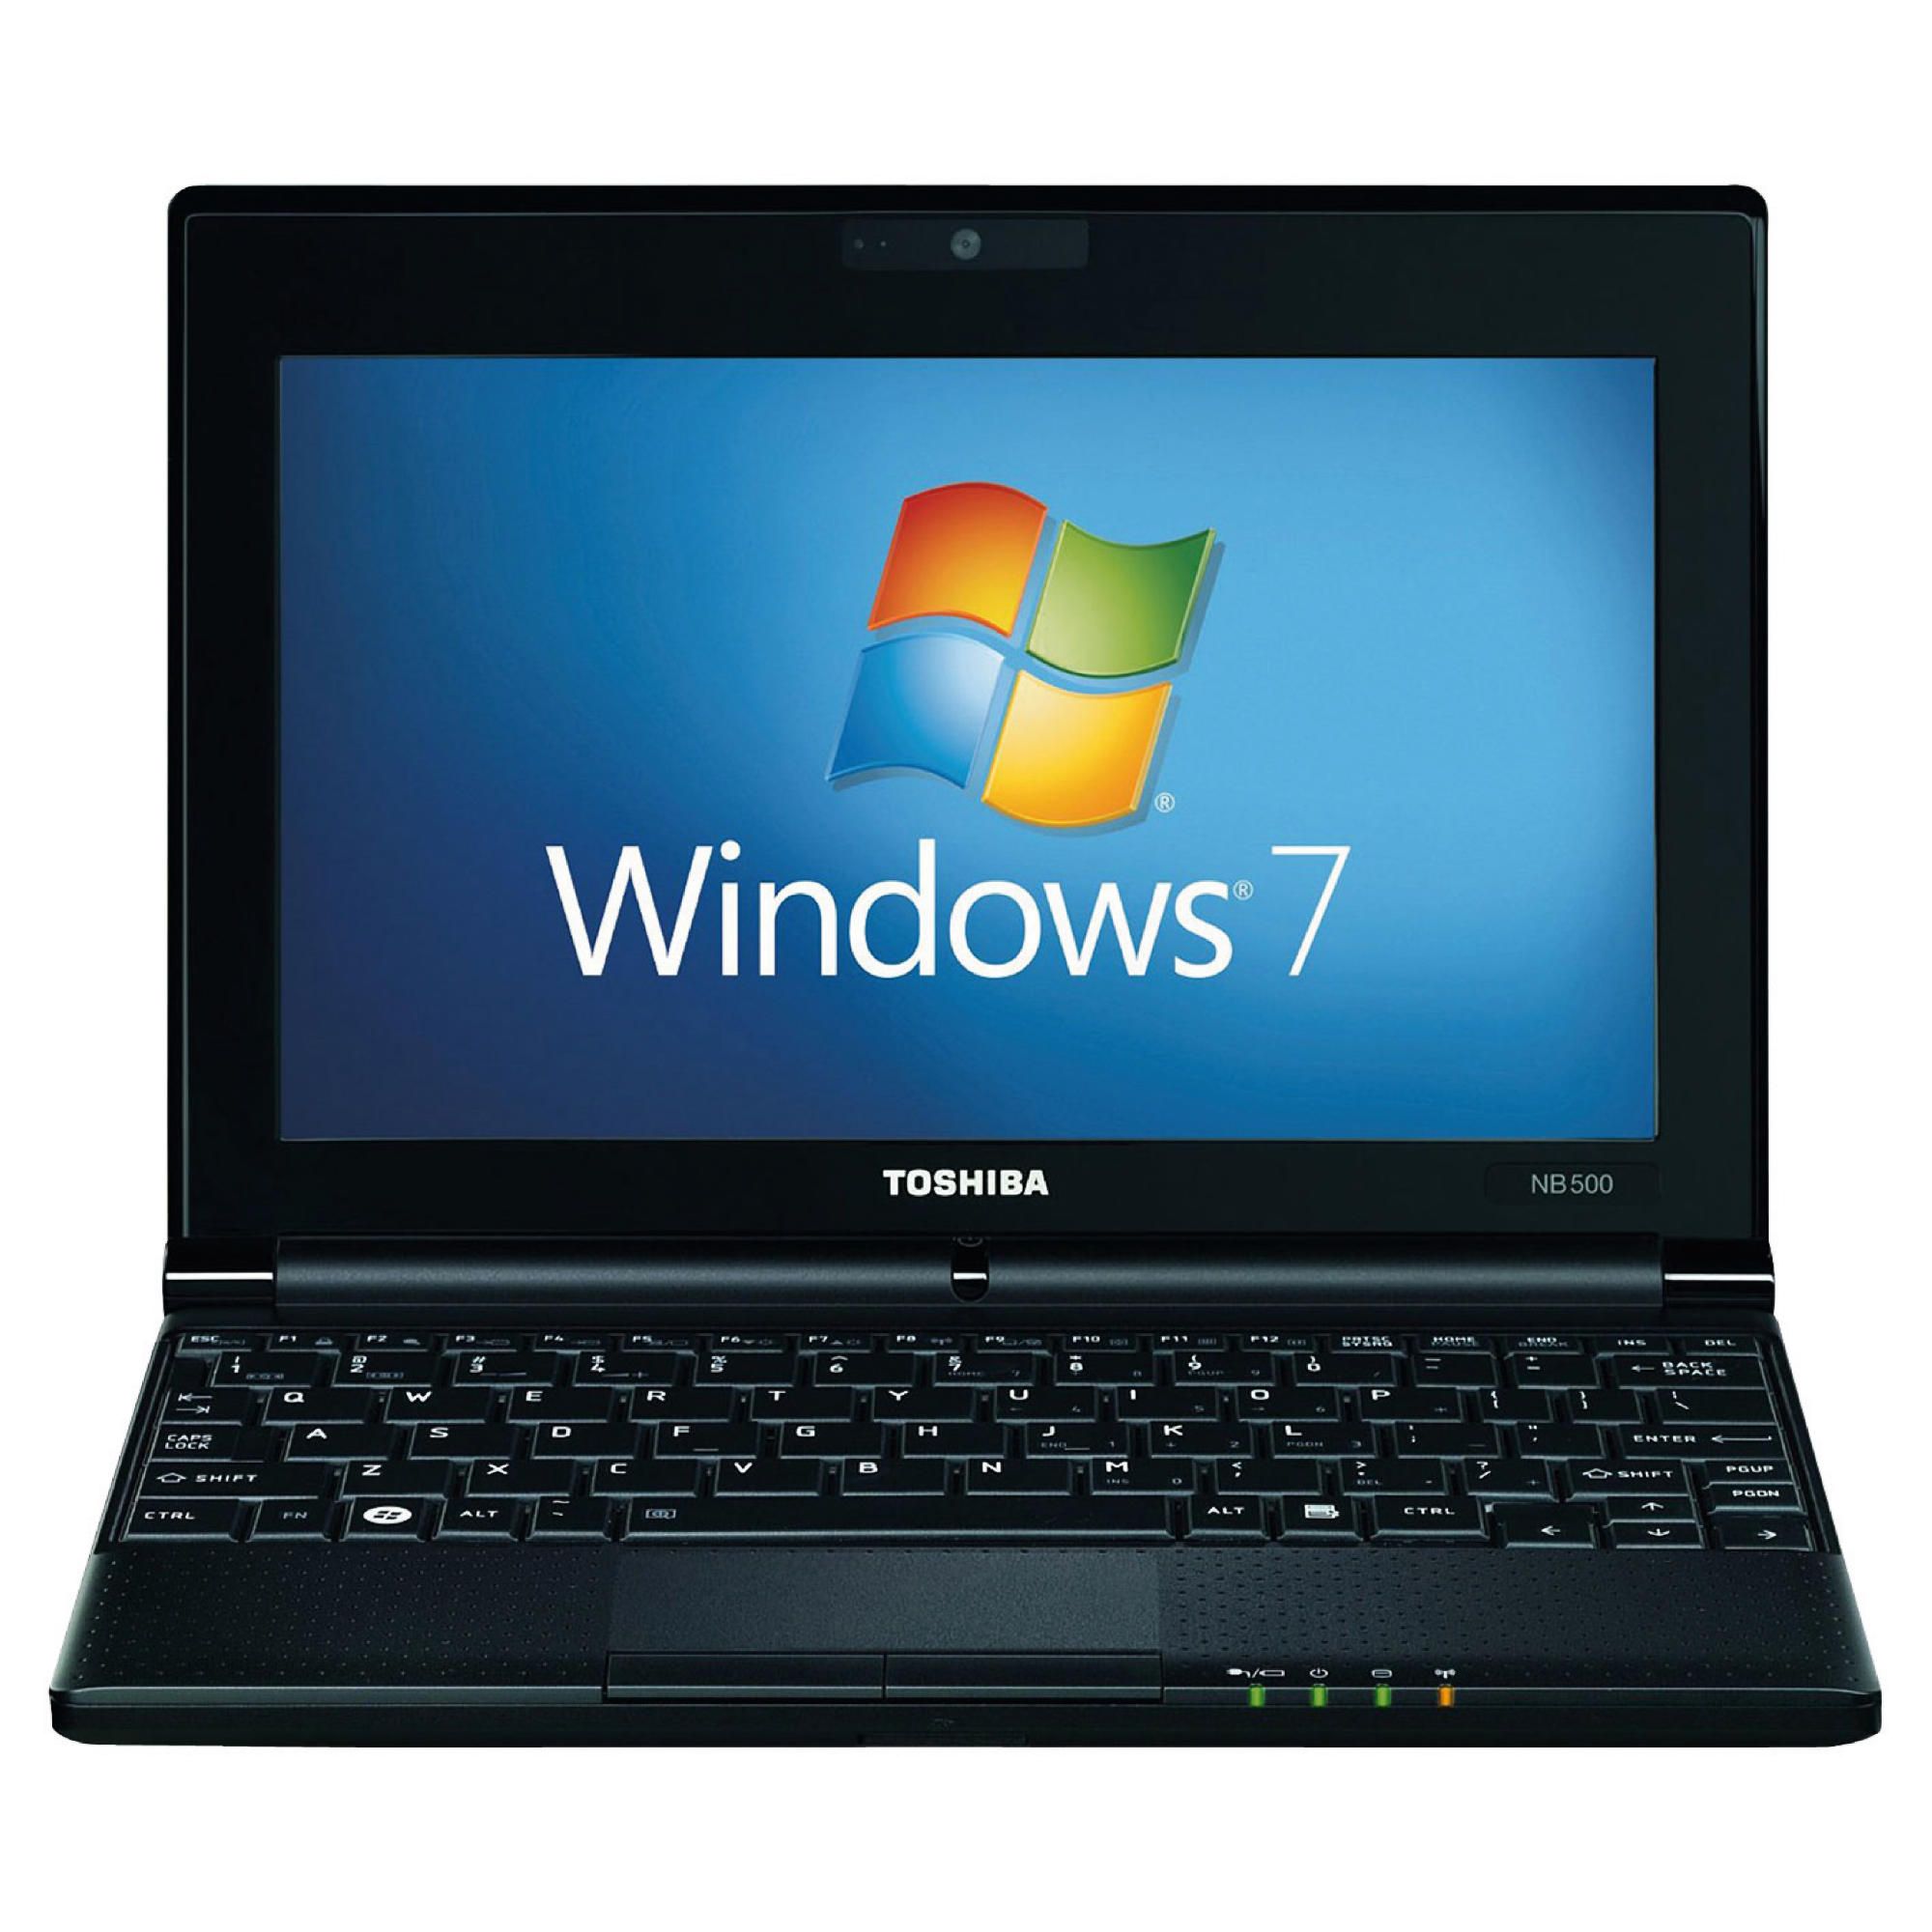 Toshiba NB500-11D Netbook Intel Atom (N455) 1.66GHz 1024MB 250GB 10.1 inch TFT WLAN Windows 7 Starter (Intel GMA 3150) (Matt Black) at Tesco Direct